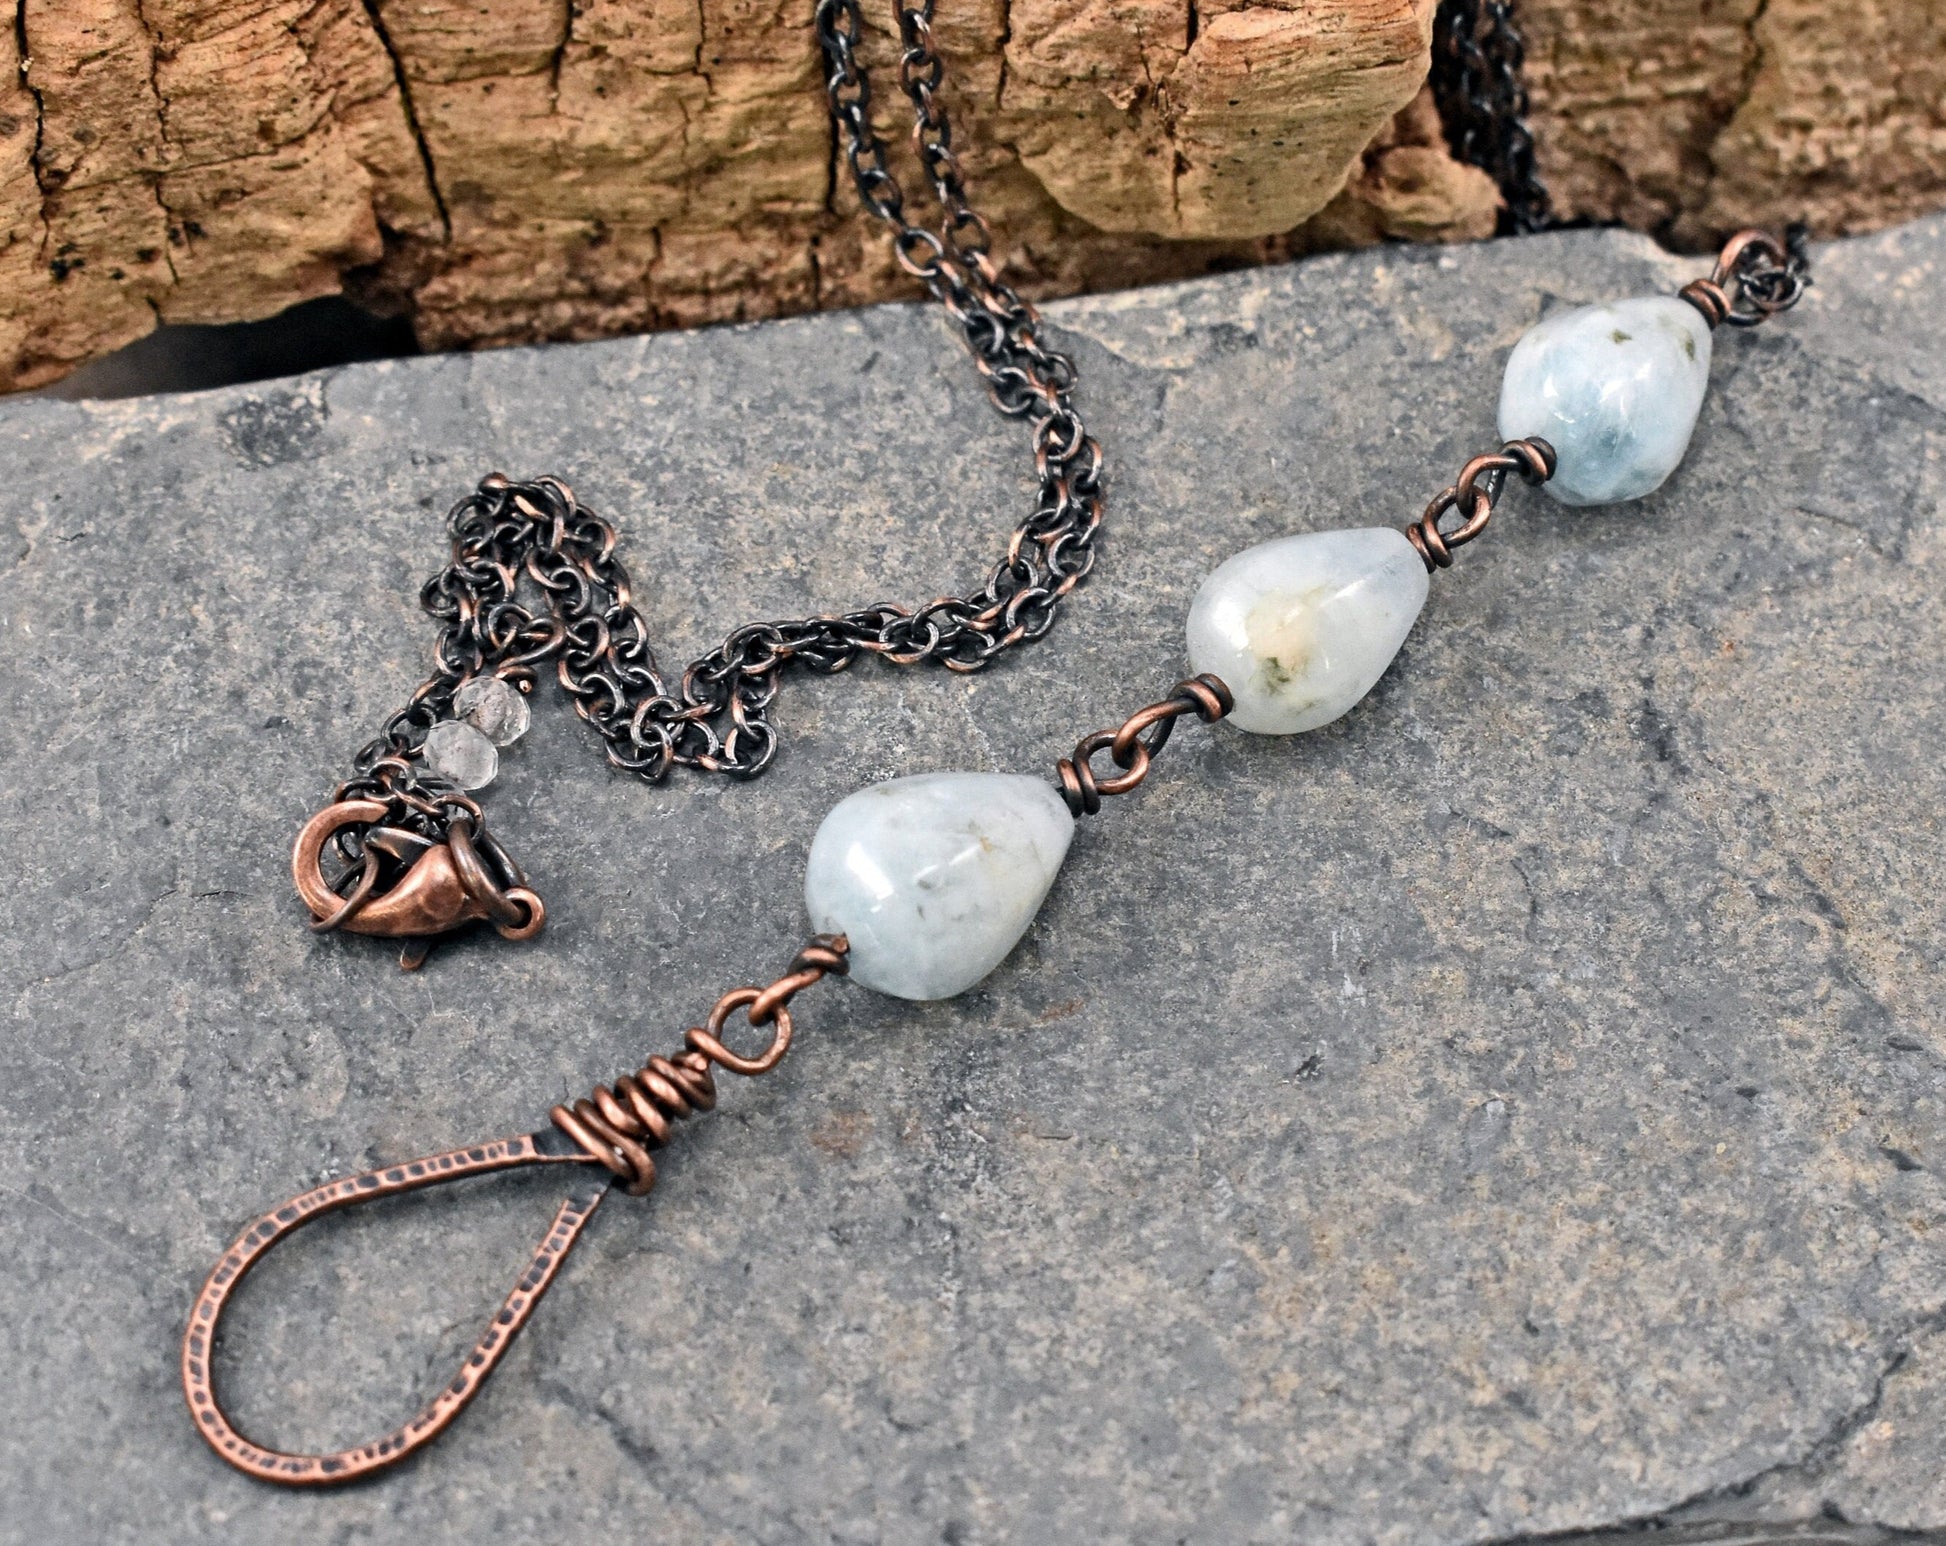 Aquamarine Teardrop Necklace, Copper Pale Blue Stone Pendant, Unique Natural Gemstone Jewelry Handmade